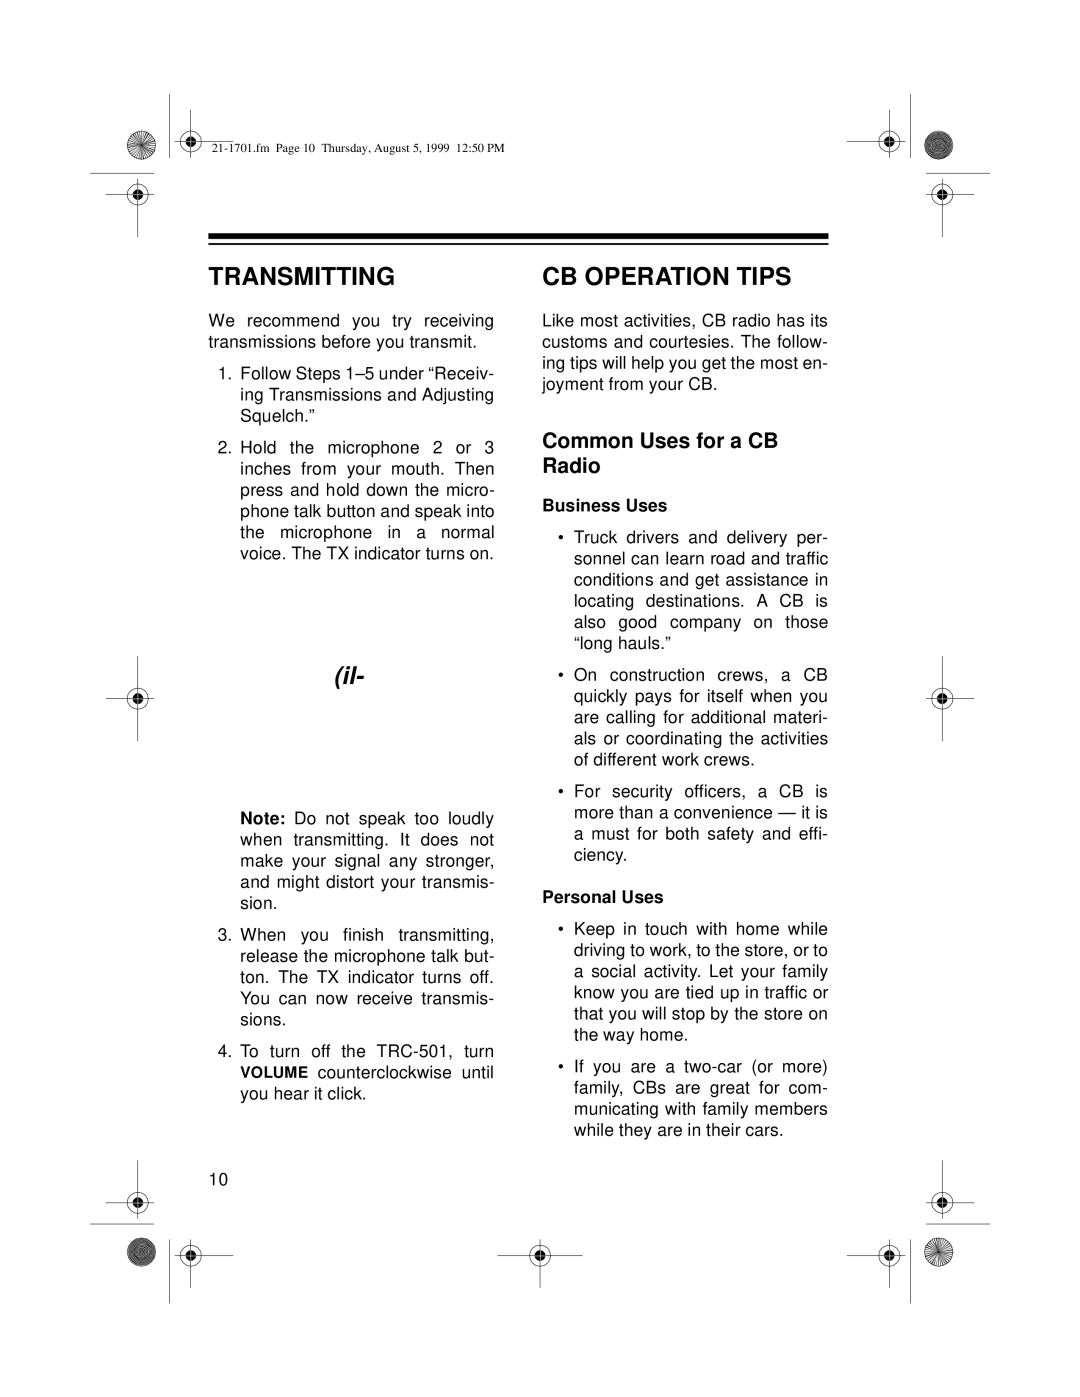 Radio Shack TRC-501 owner manual Transmitting, CB Operation Tips, Common Uses for a CB Radio 